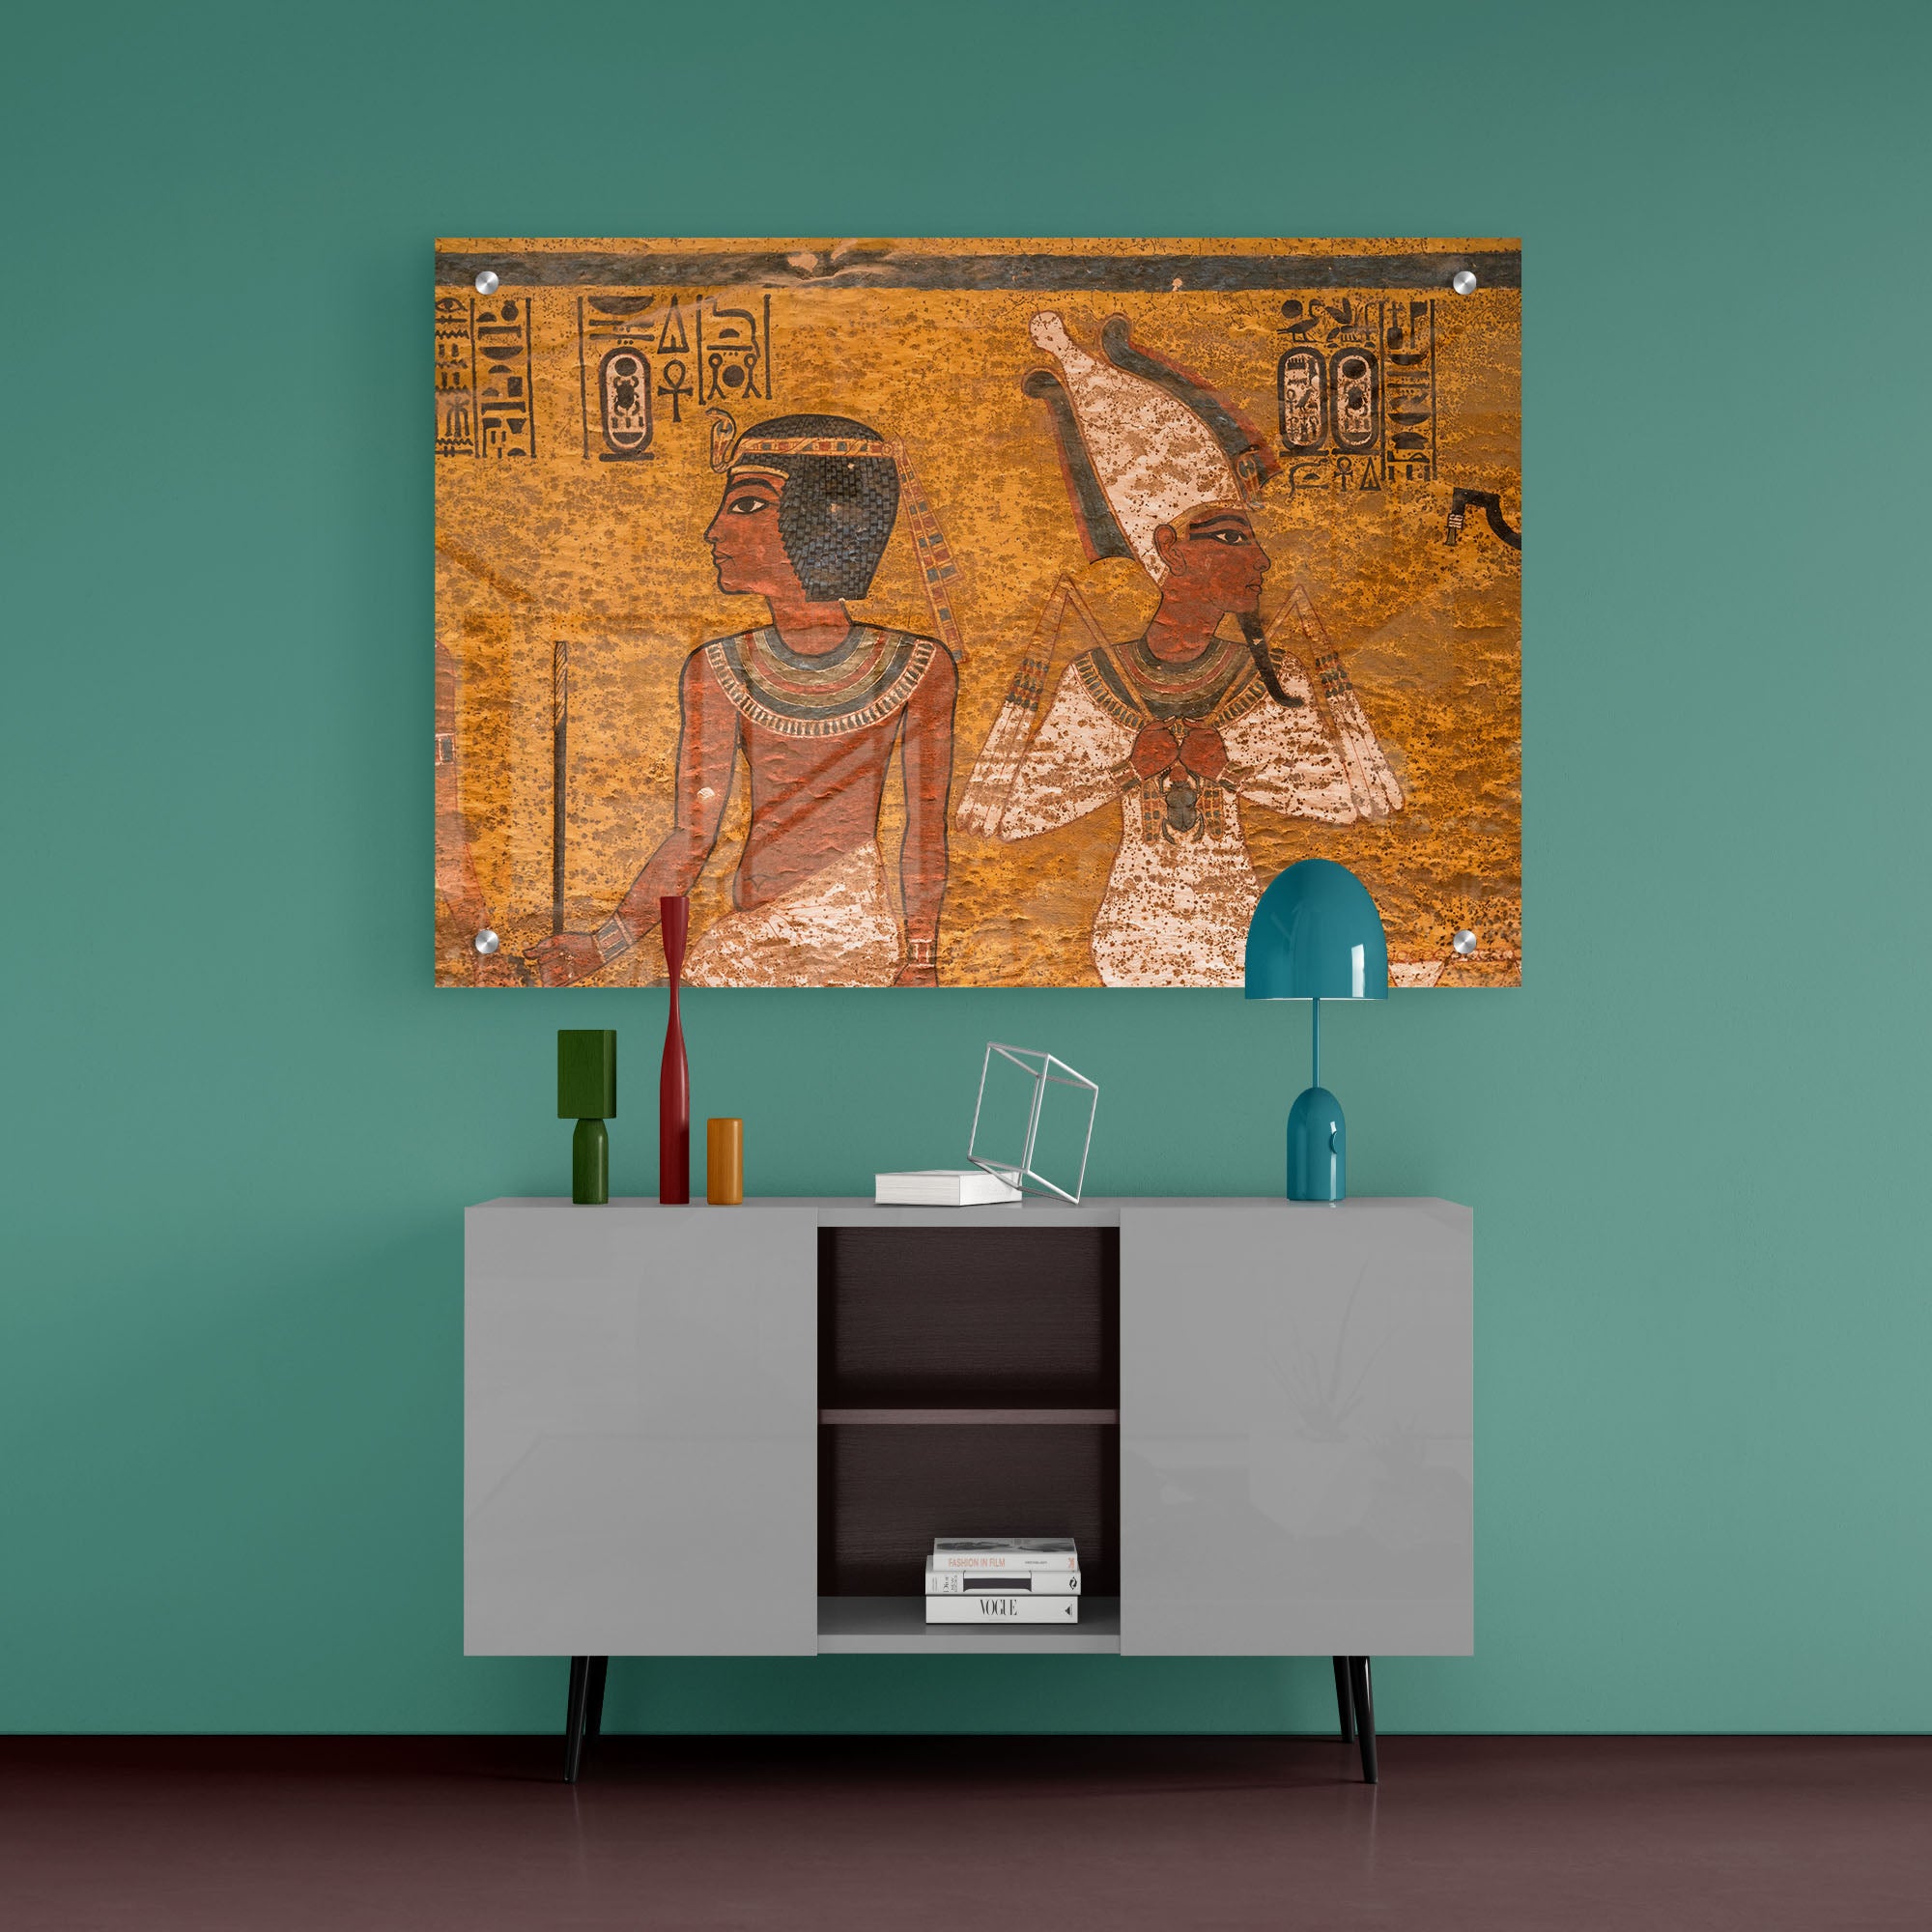 Egyptian Art Acrylic Wall Painting